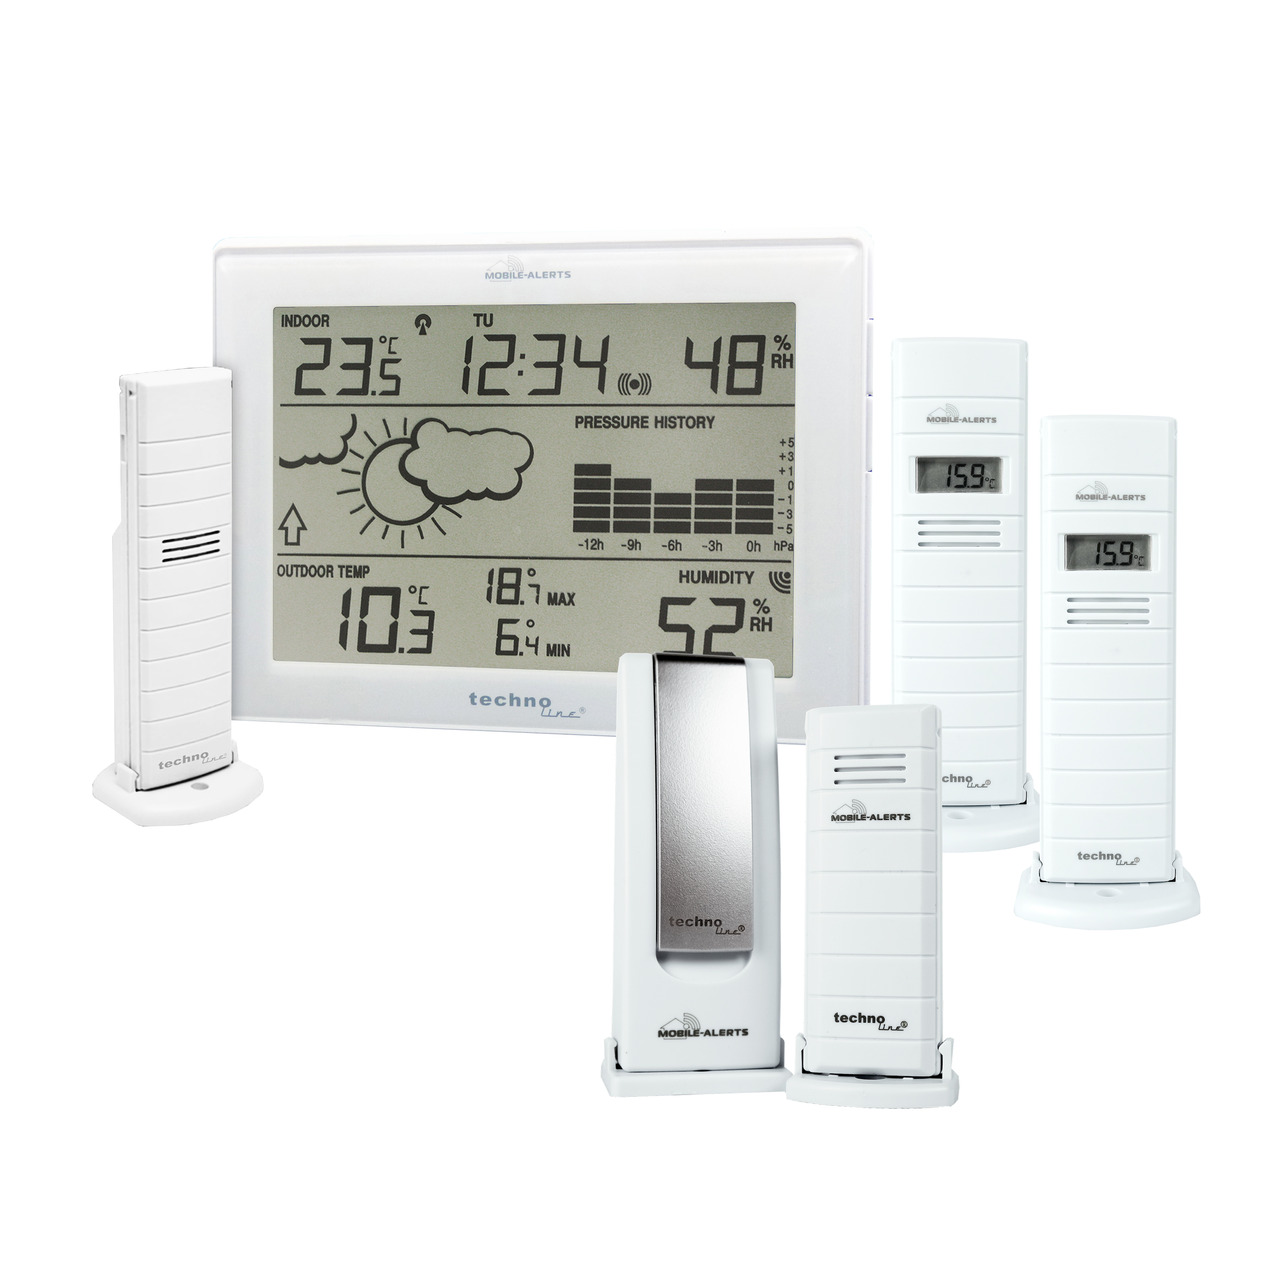 Mobile Alerts Raumklimaüberwachungs-Set (1x Gateway- 1x Wetterstation- 1x Sensor- 3x Sensor) unter Klima - Wetter - Umwelt